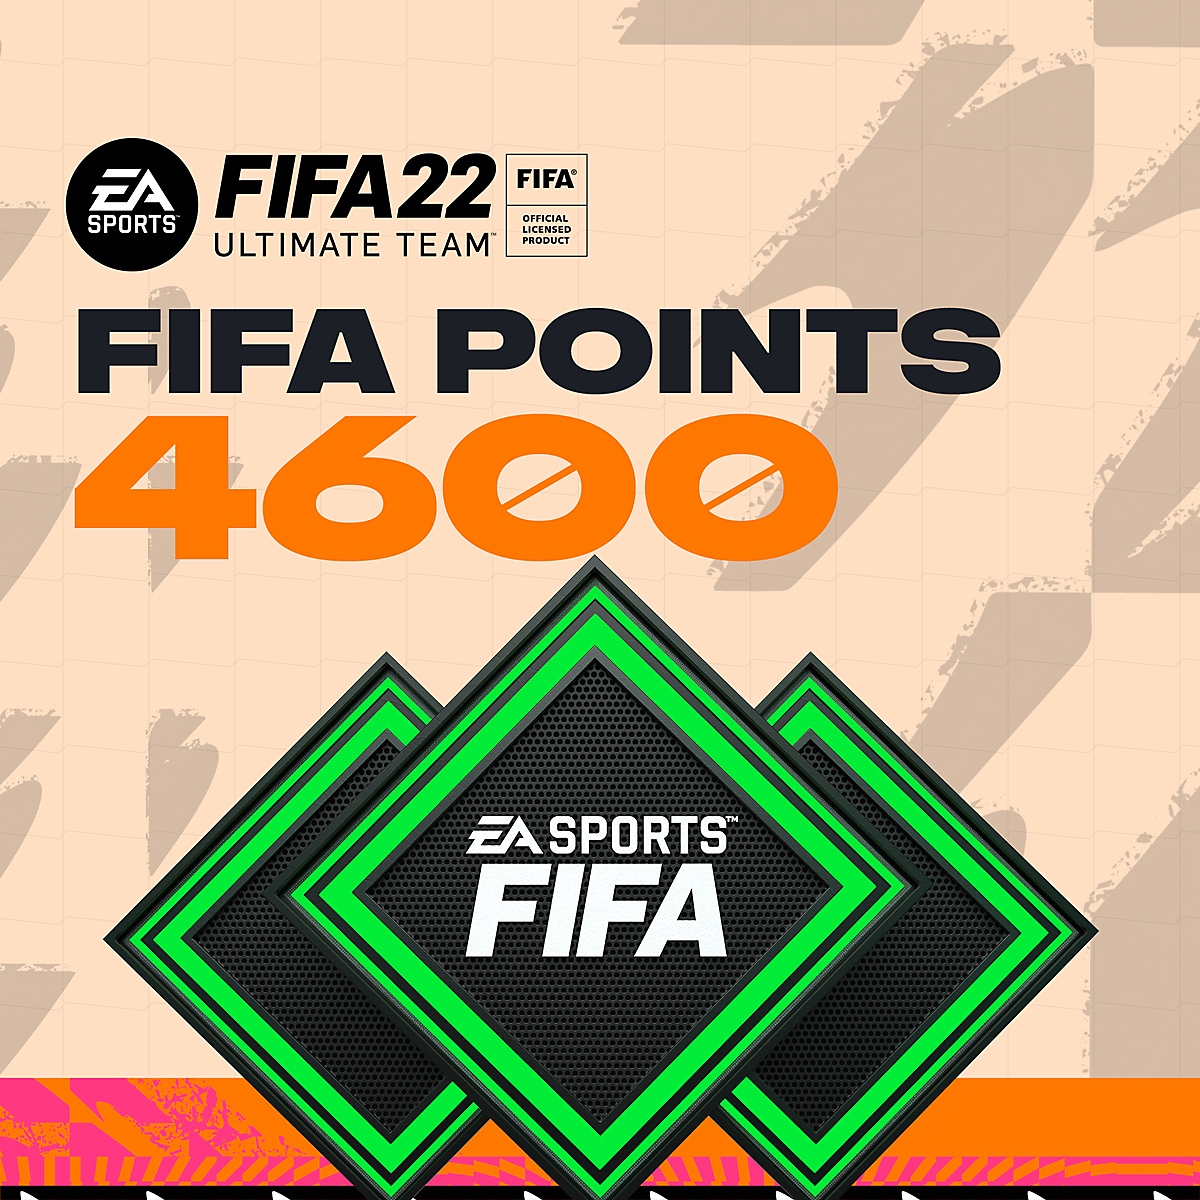 FIFA Ultimate Team - صورة fifa points الفنية